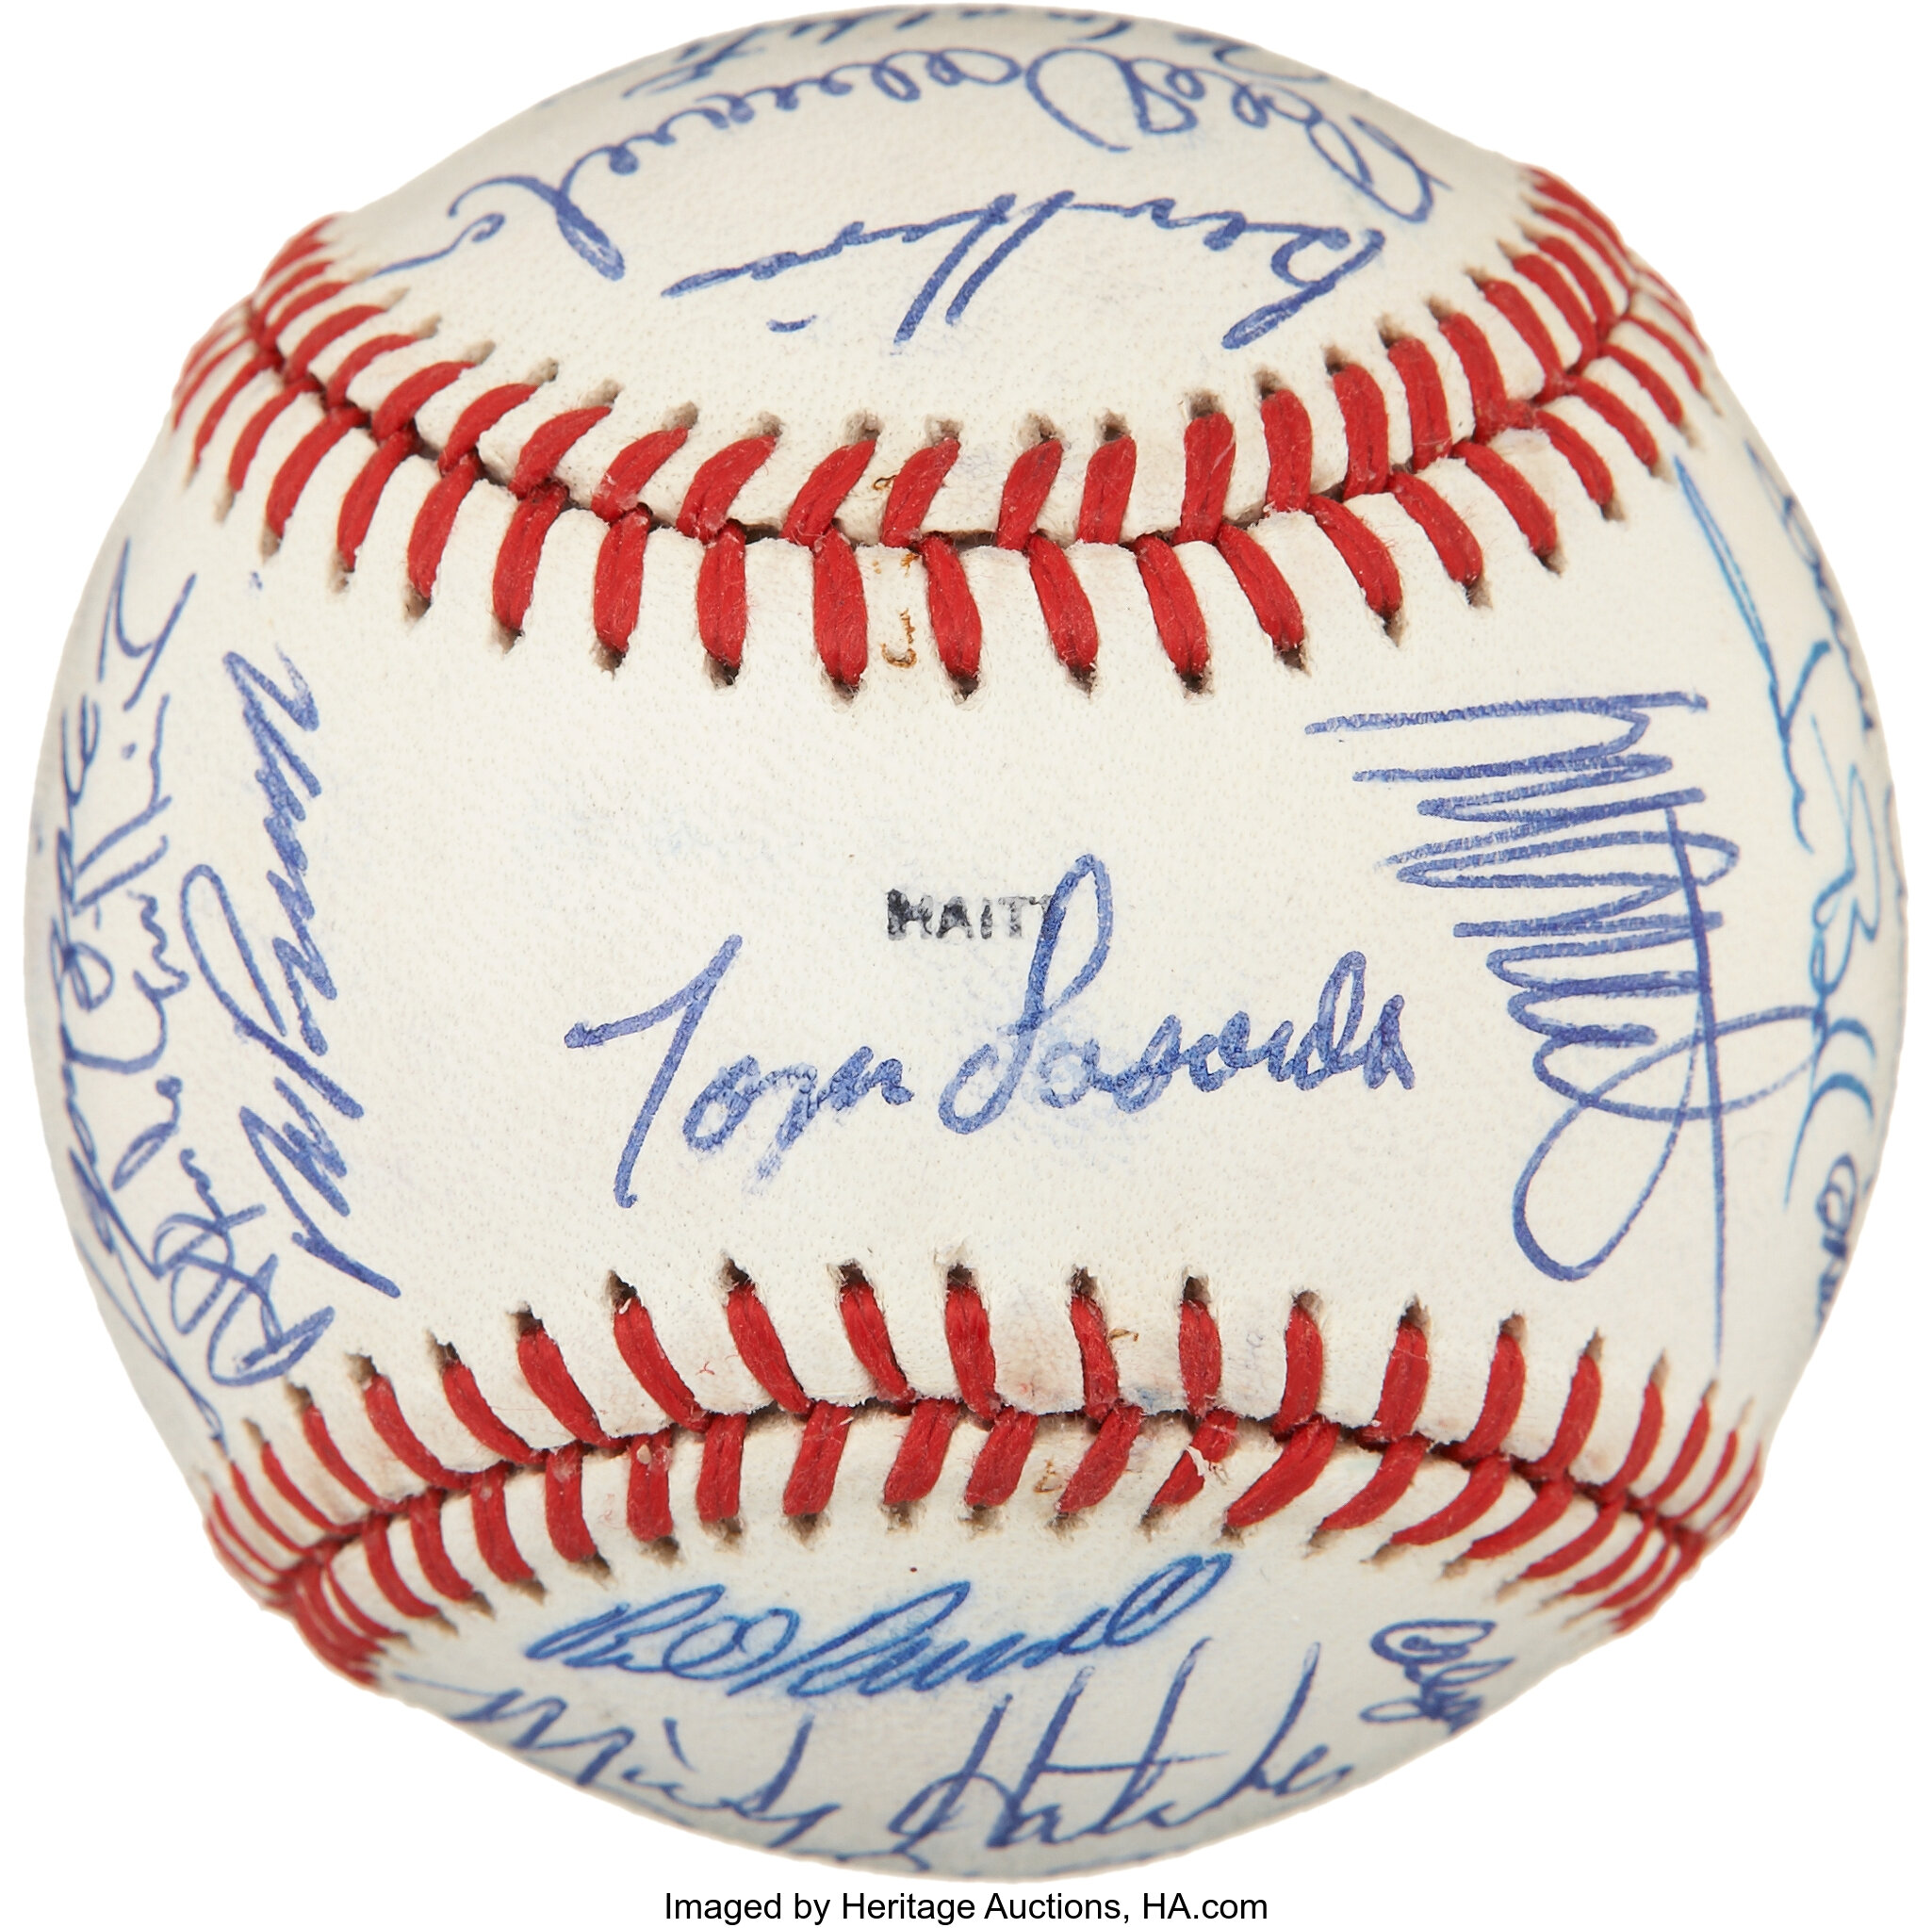 Orel Hershiser Los Angeles Dodgers Signed Autographed Sports